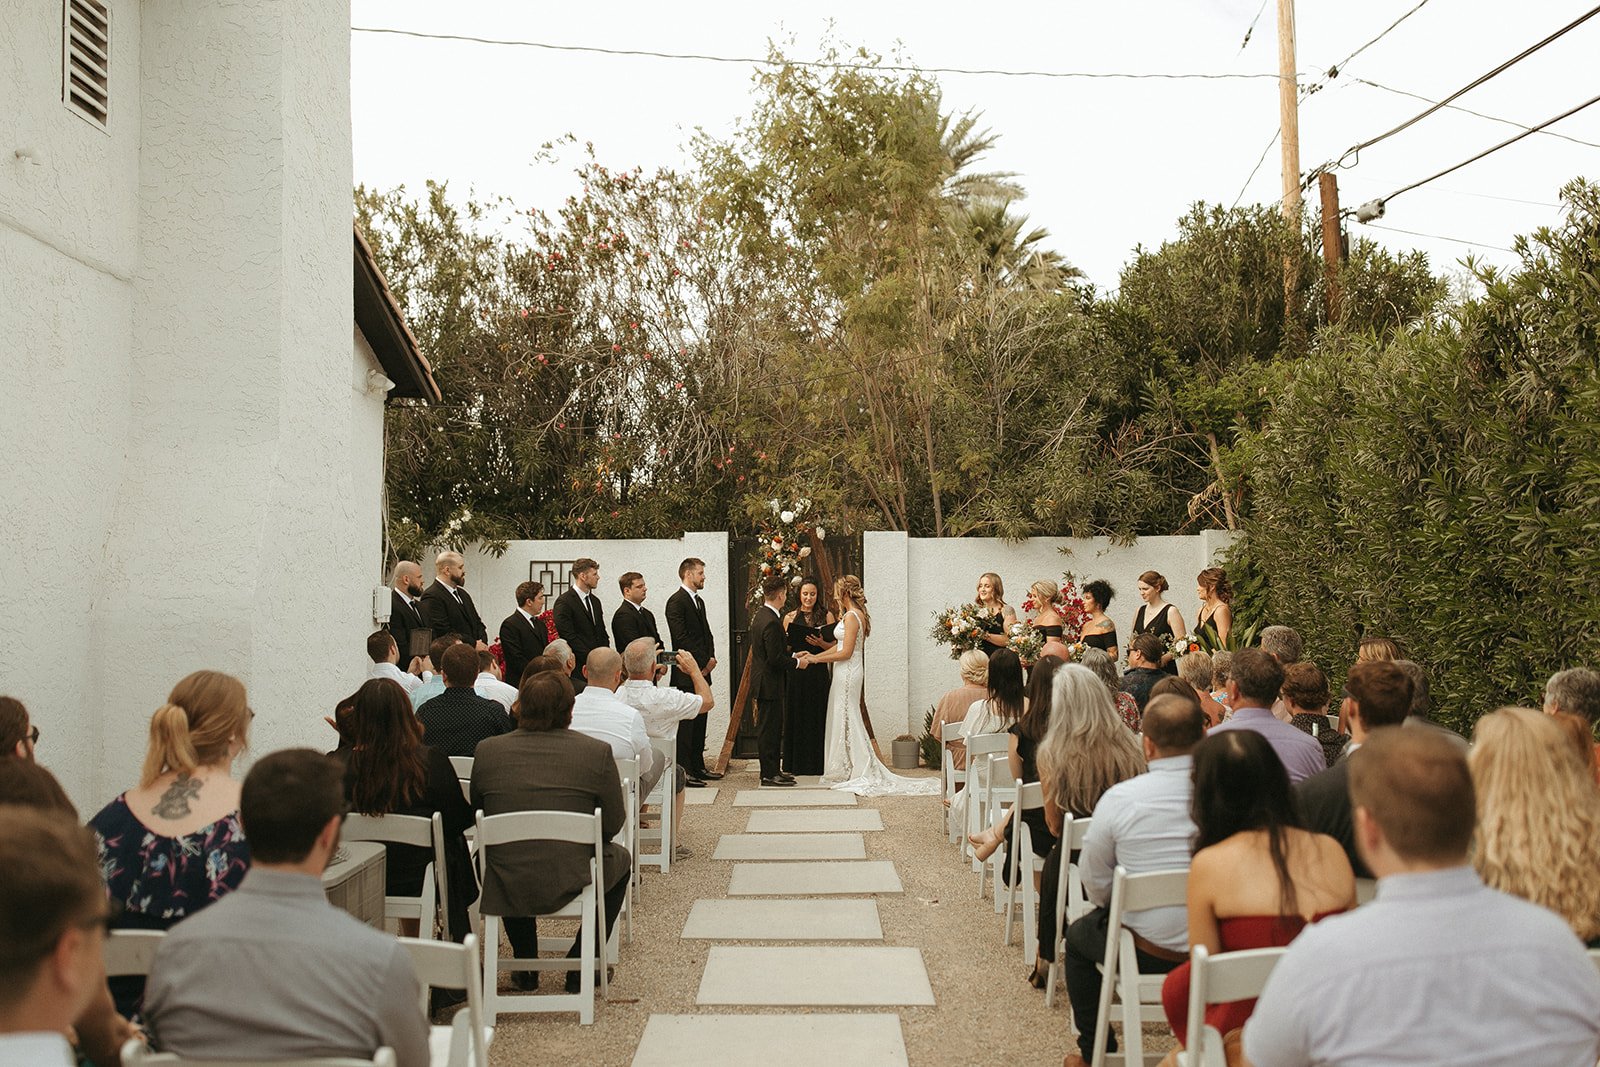 Intimate Arizona wedding photos at an Airbnb